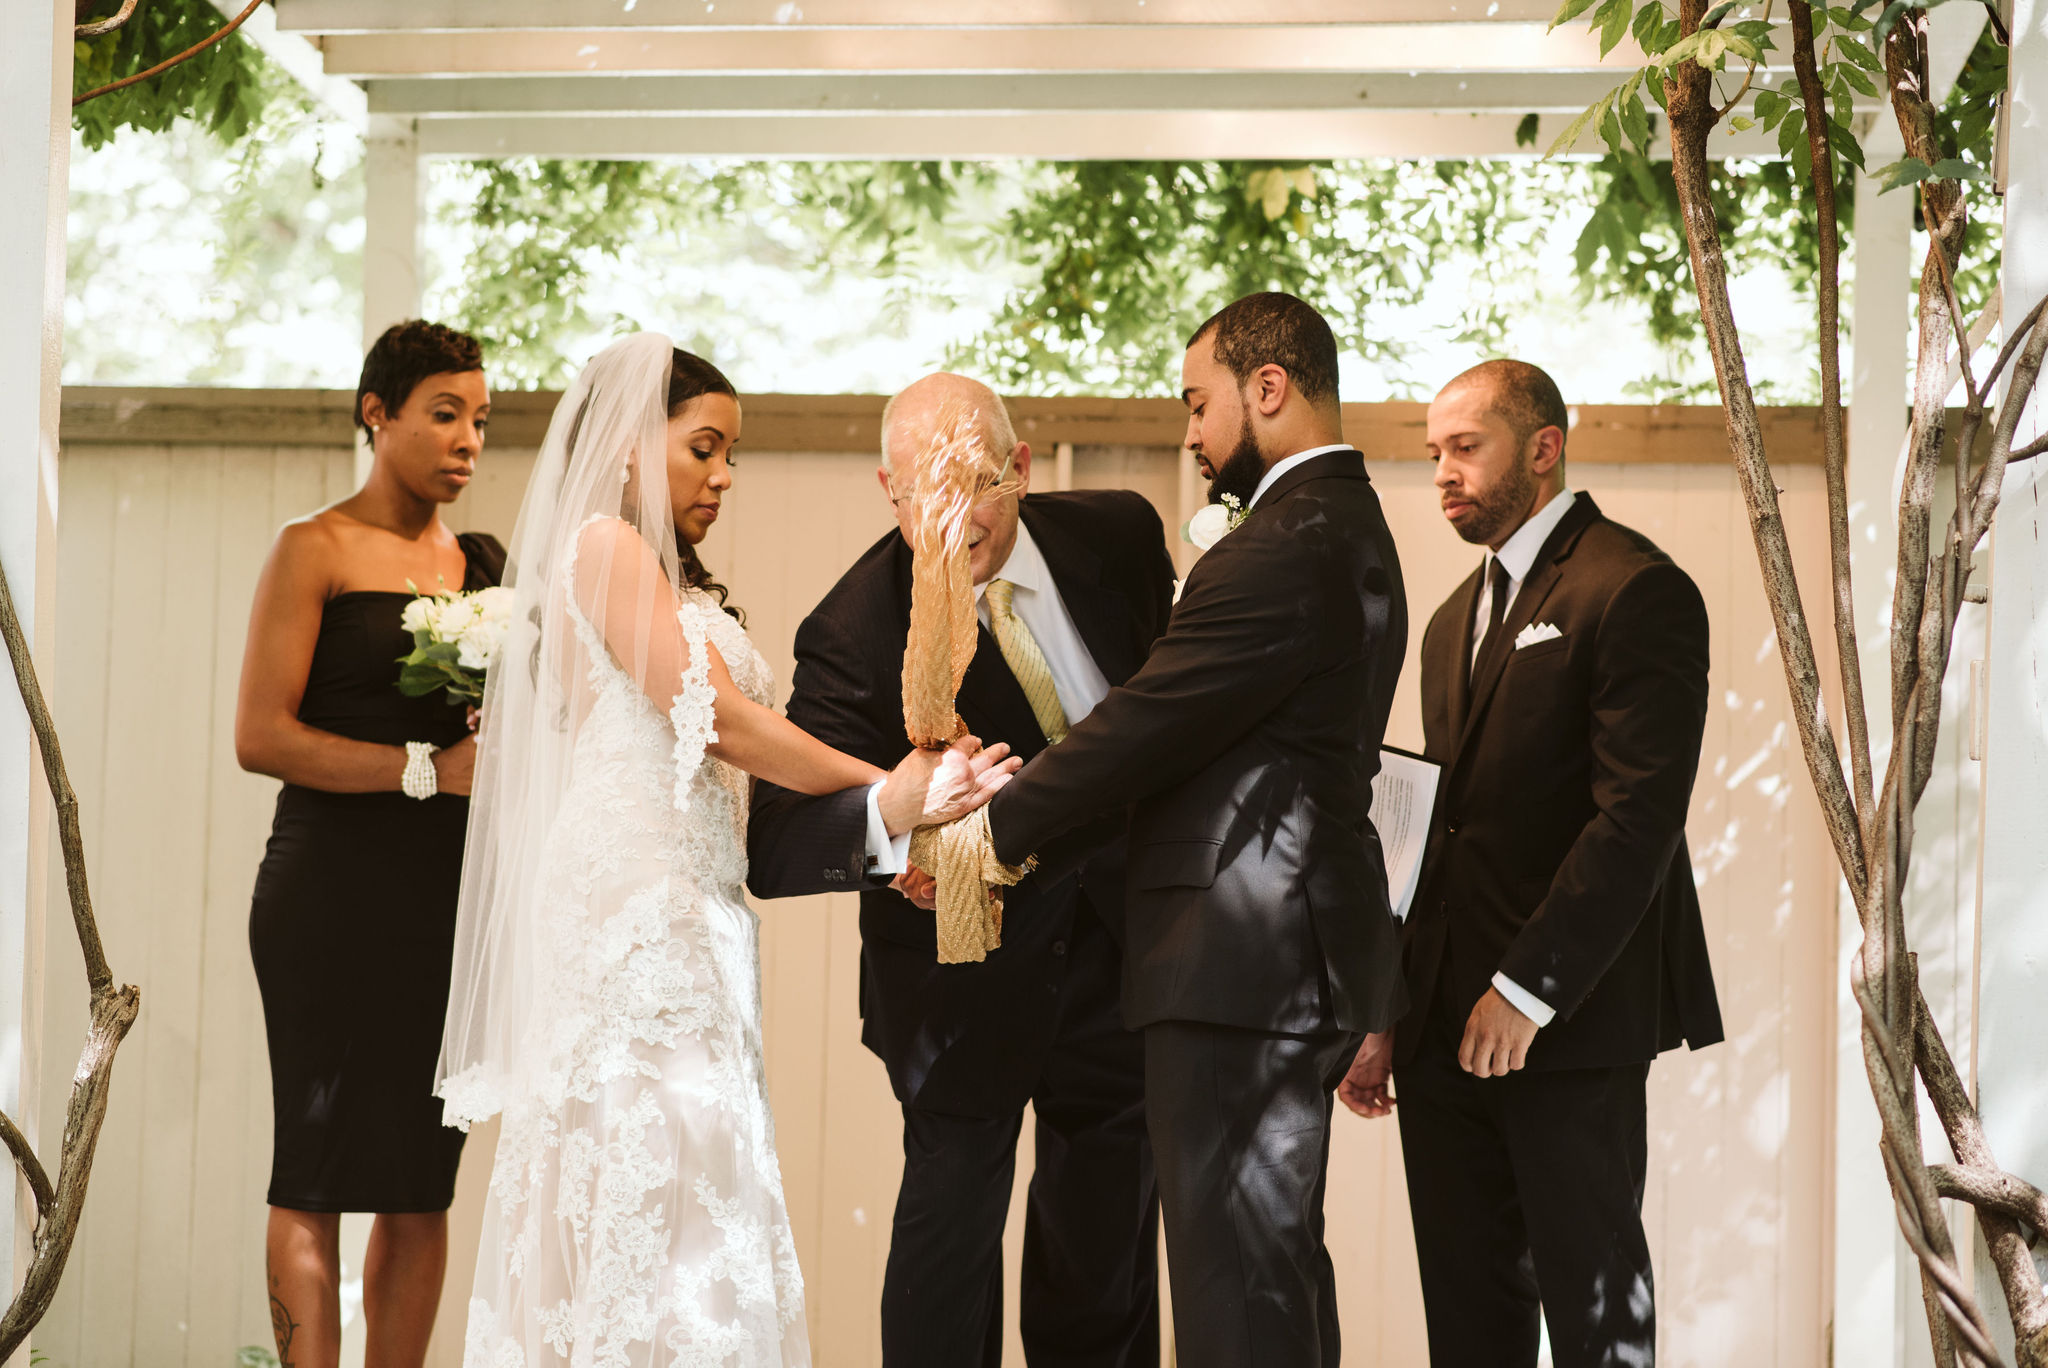  Baltimore, Maryland Wedding Photographer, Mount Vernon, Chase Court, Classic, Outdoor Ceremony, Garden, Romantic, Bride and Groom Handfasting Ceremony, Hand Binding 